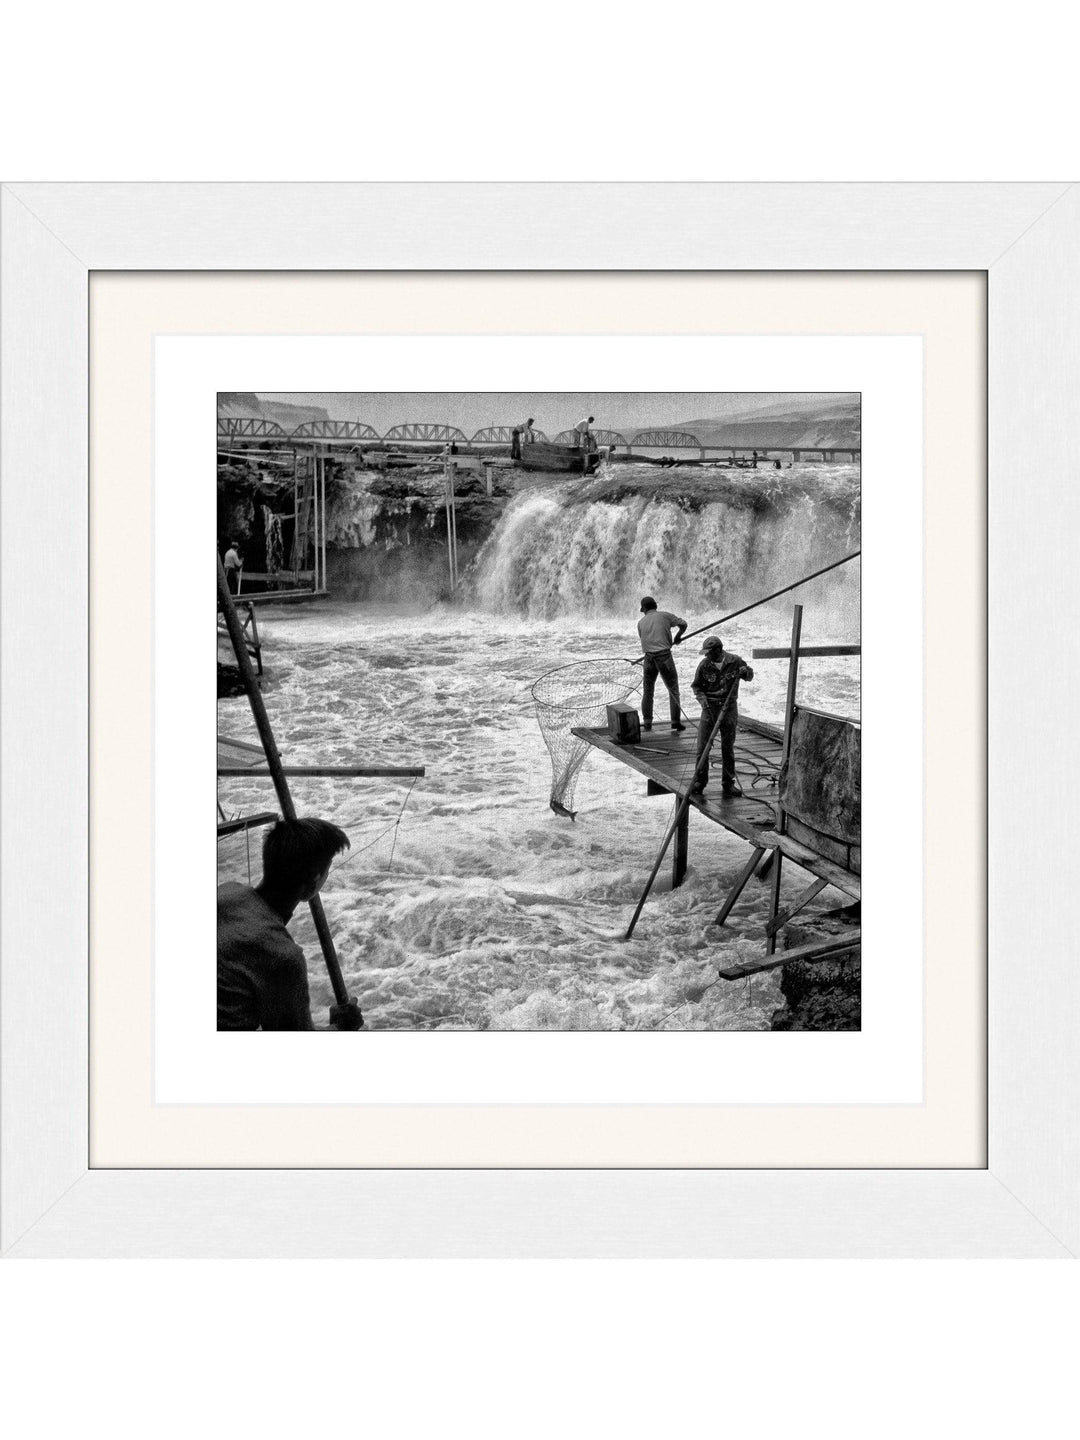 Celilo Falls Net Fishing 1956 Square Edition - Square Editions - Richard Stefani - Stefani Fine Art